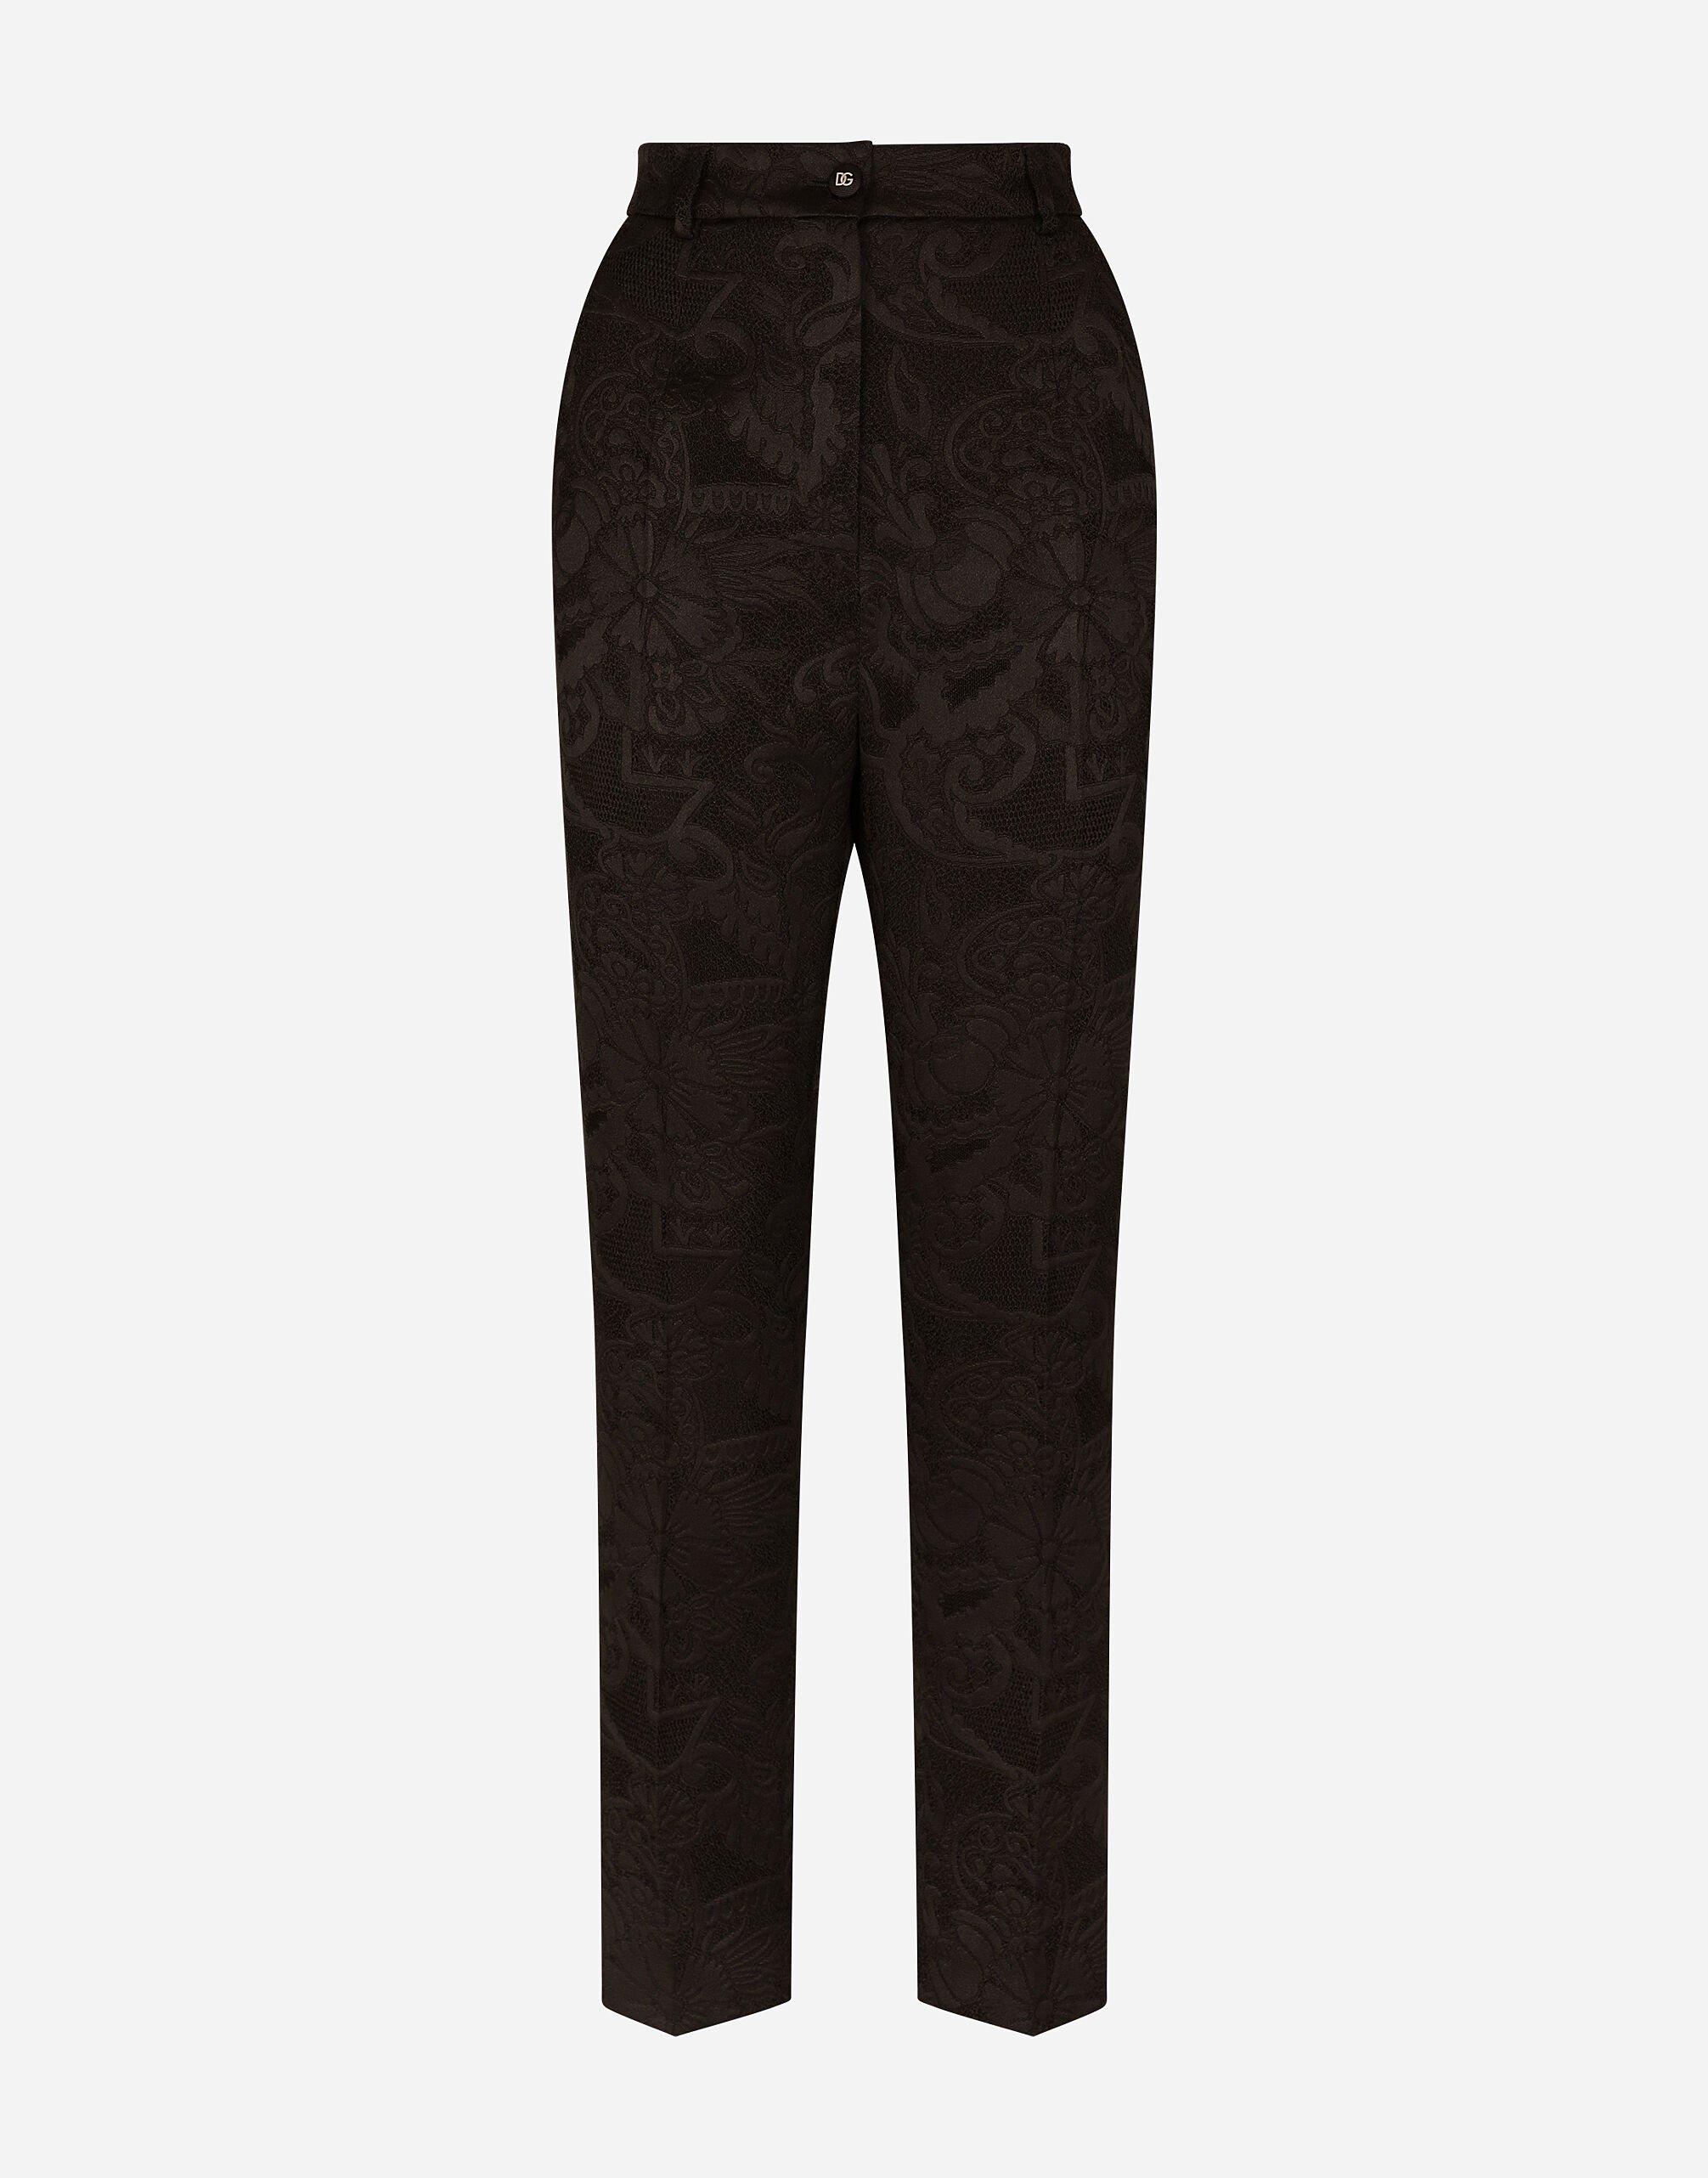 Dolce & Gabbana Floral jacquard pants Black F9R14LGDBVO